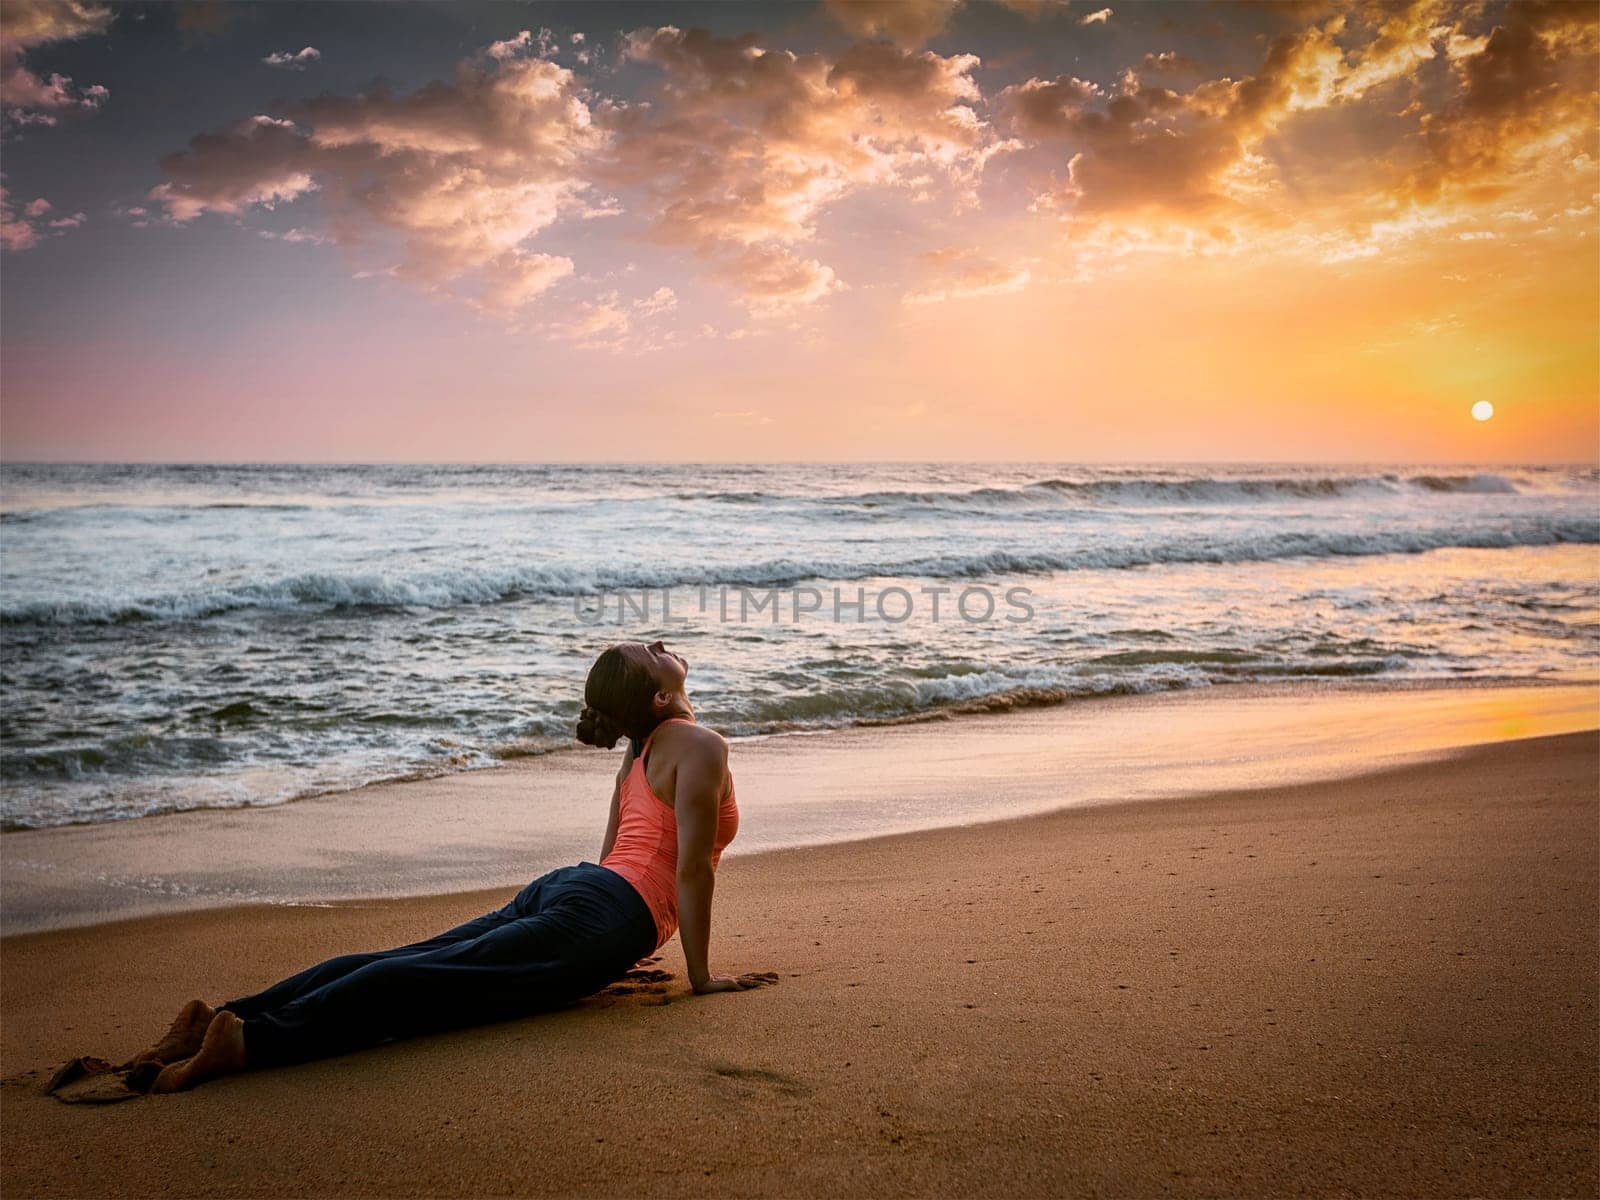 Woman practices yoga asana Urdhva Mukha Svanasana at the beach by dimol